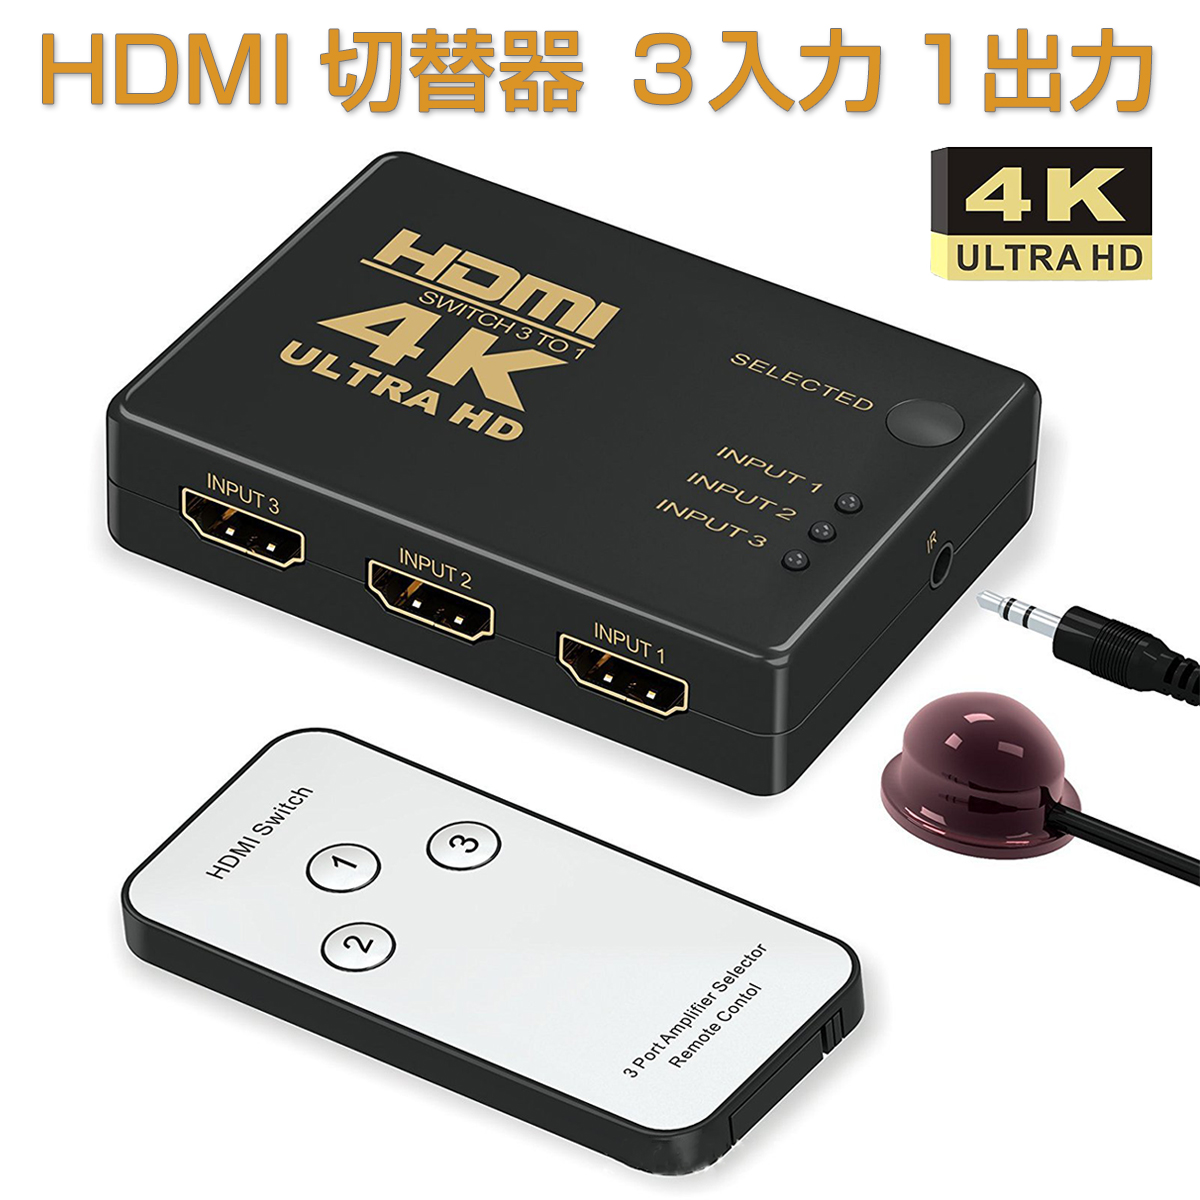 HDMI セレクター 切替器 分配器 fire tv stick 3入力1出力 4K 2K FHD対応 3D映像対応 USB給電ケーブル リモコン付き TV PC等に対応 SDM便送料無料 1ヶ月保証